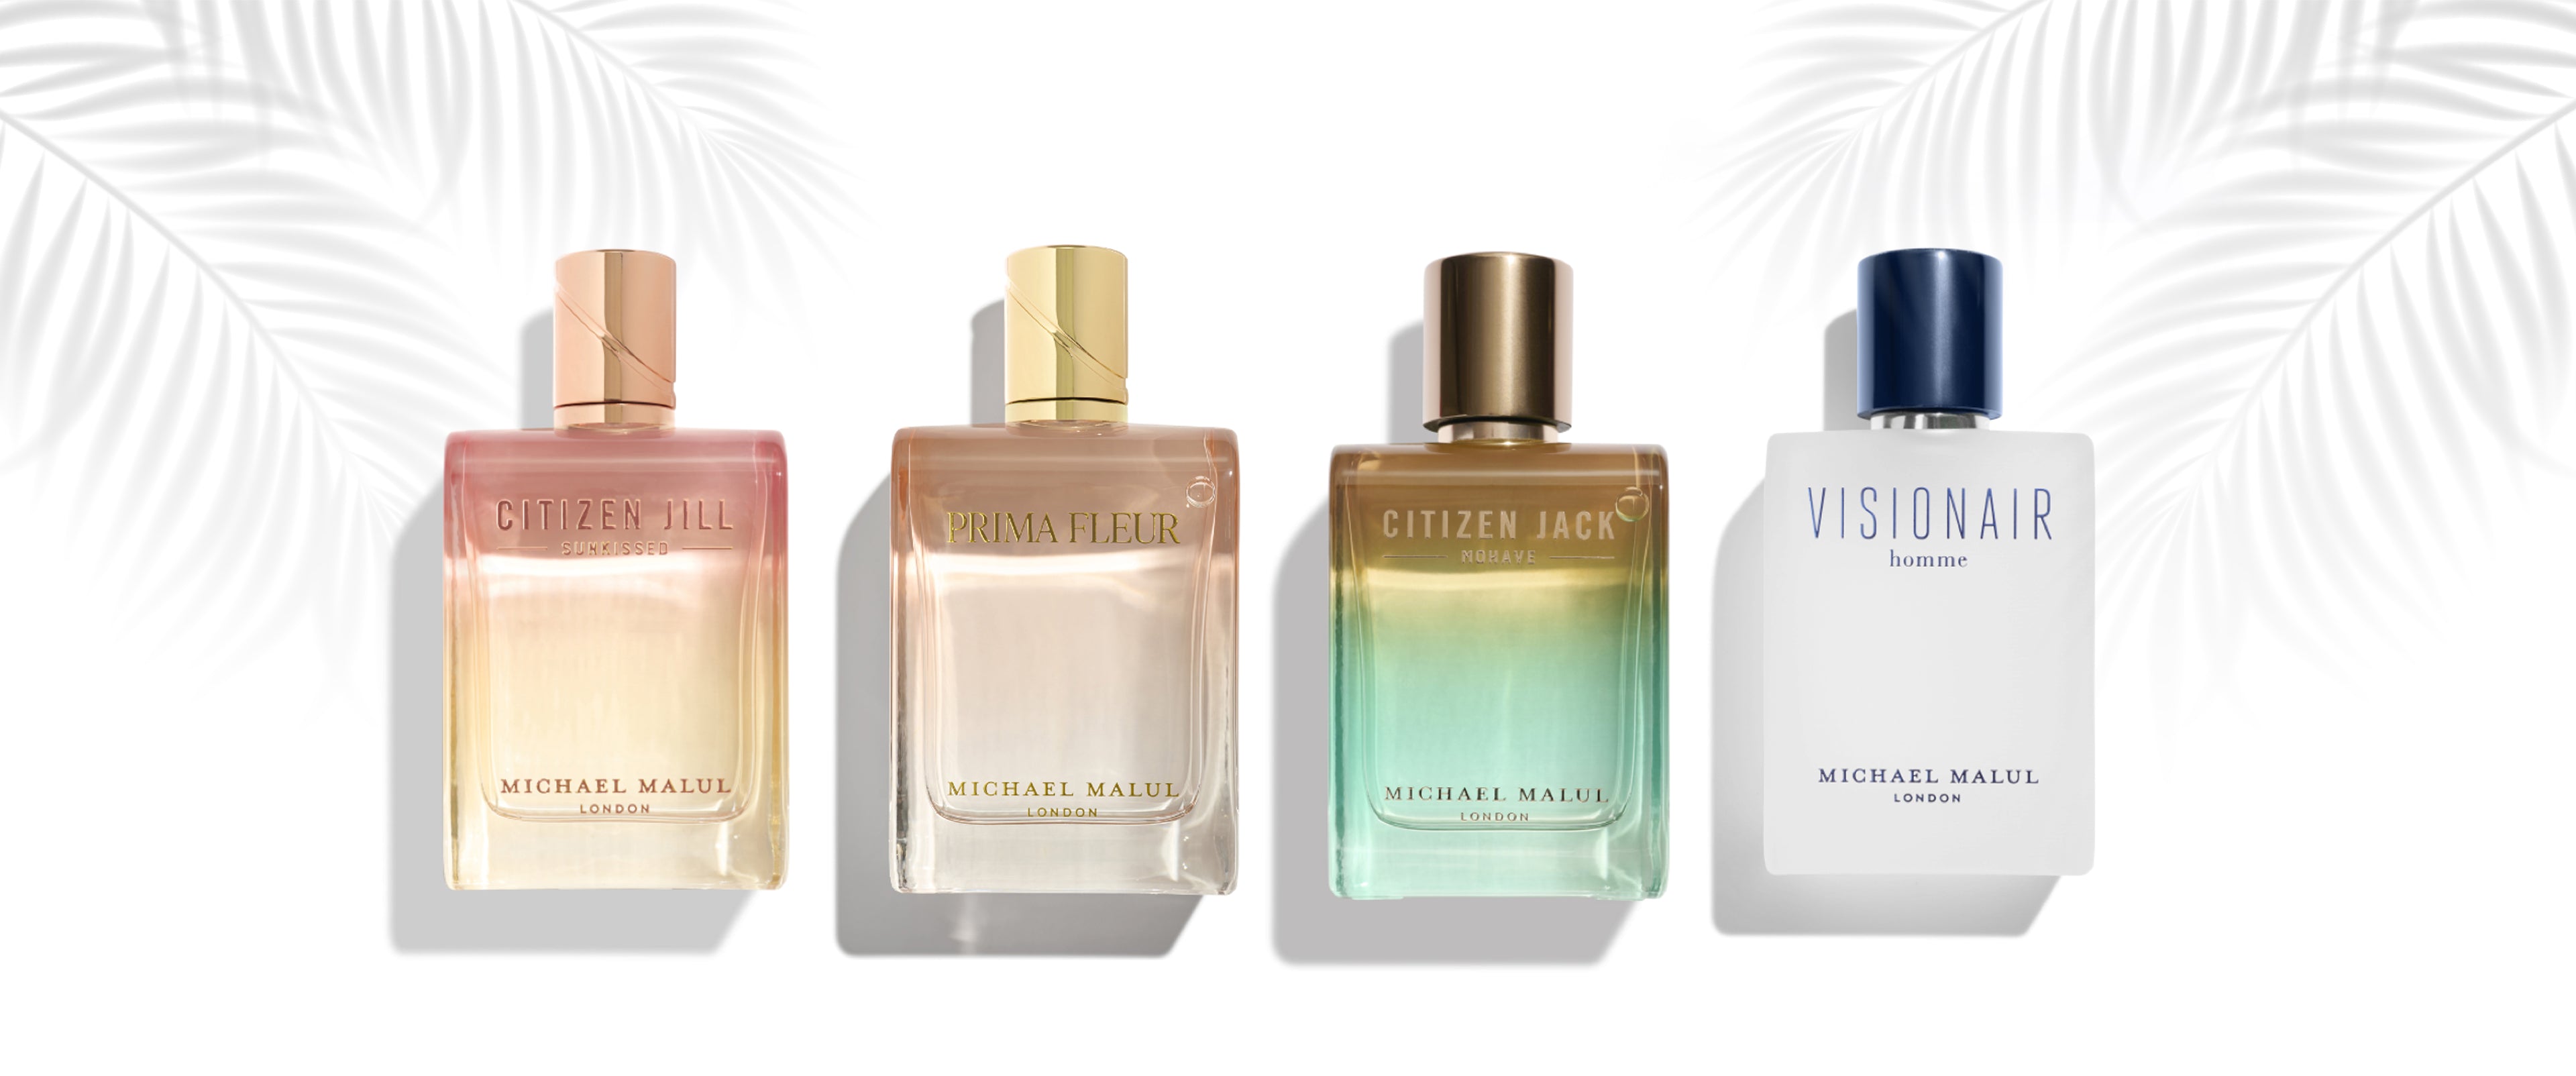 Perfume Bottles by Michael Malul